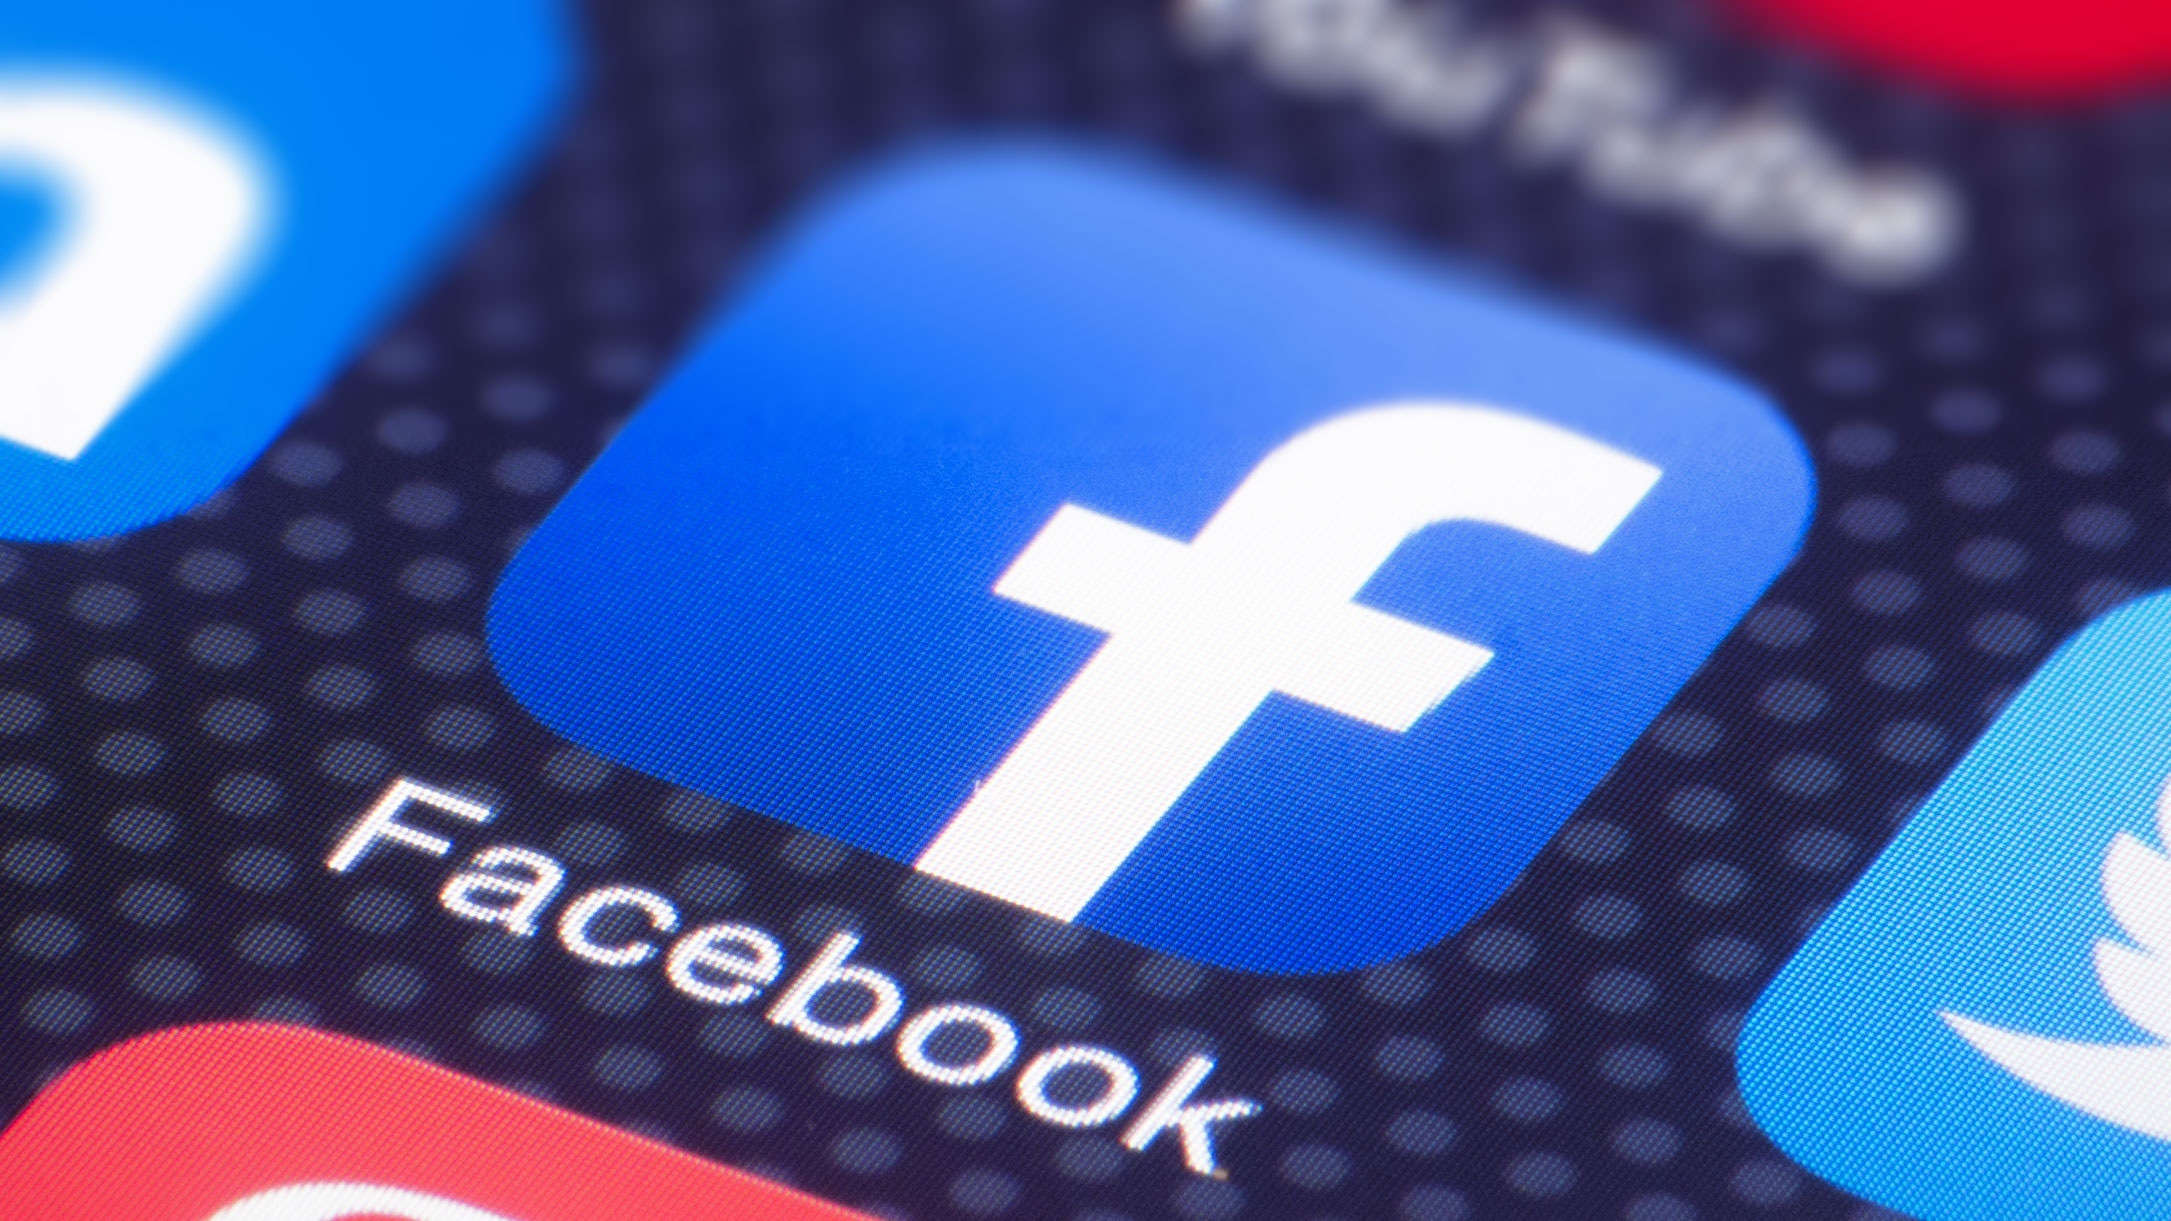 Pengguna Facebook Bisa Memiliki Lima Akun Pribadi